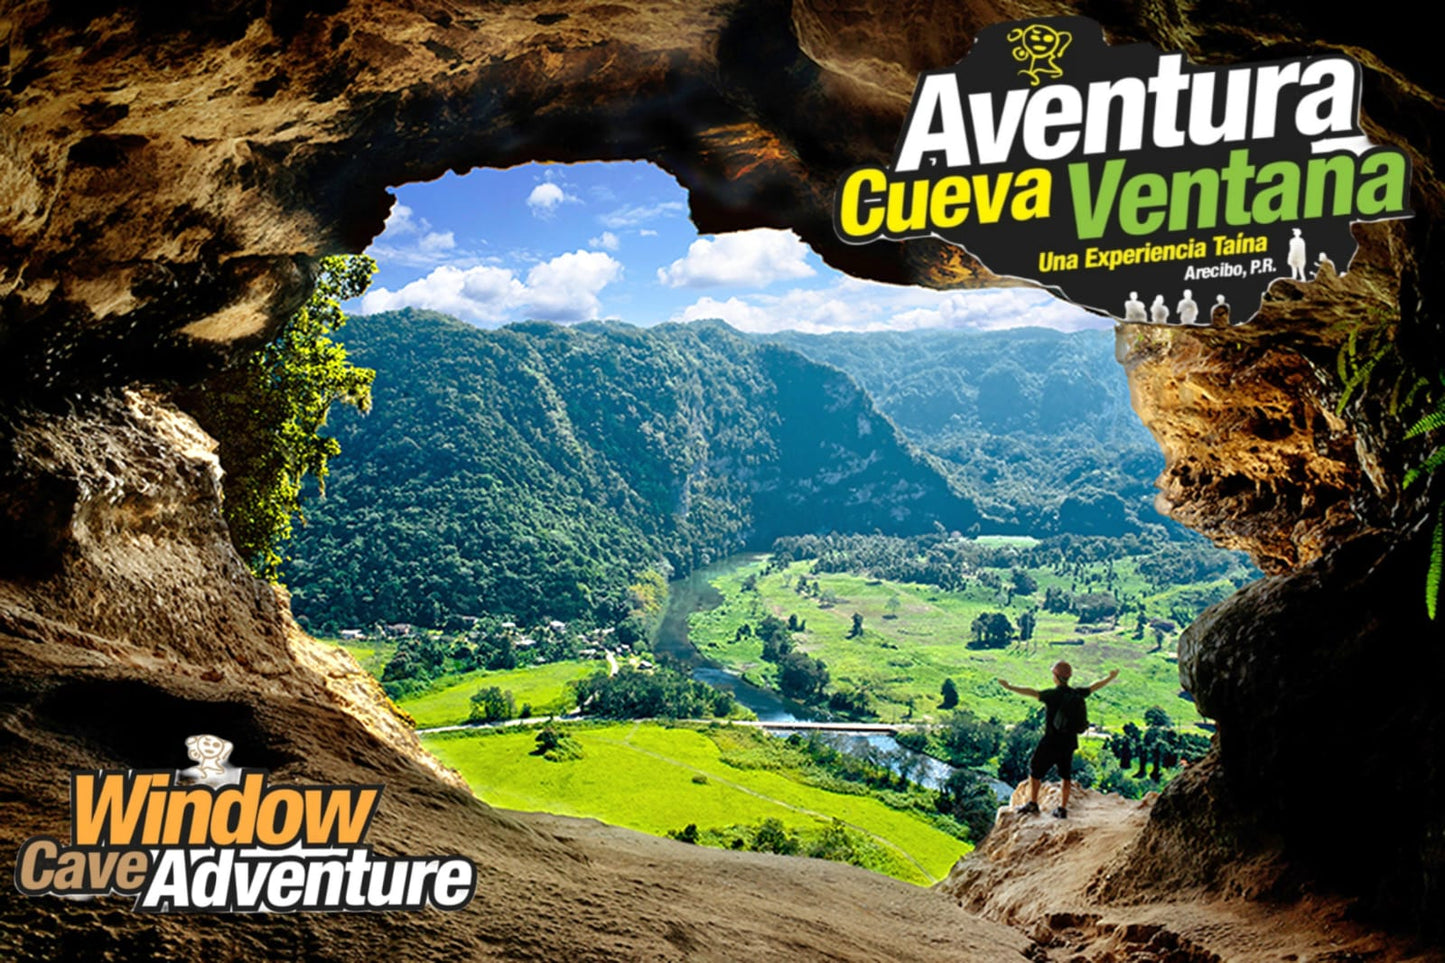 Aventura Cueva Ventana